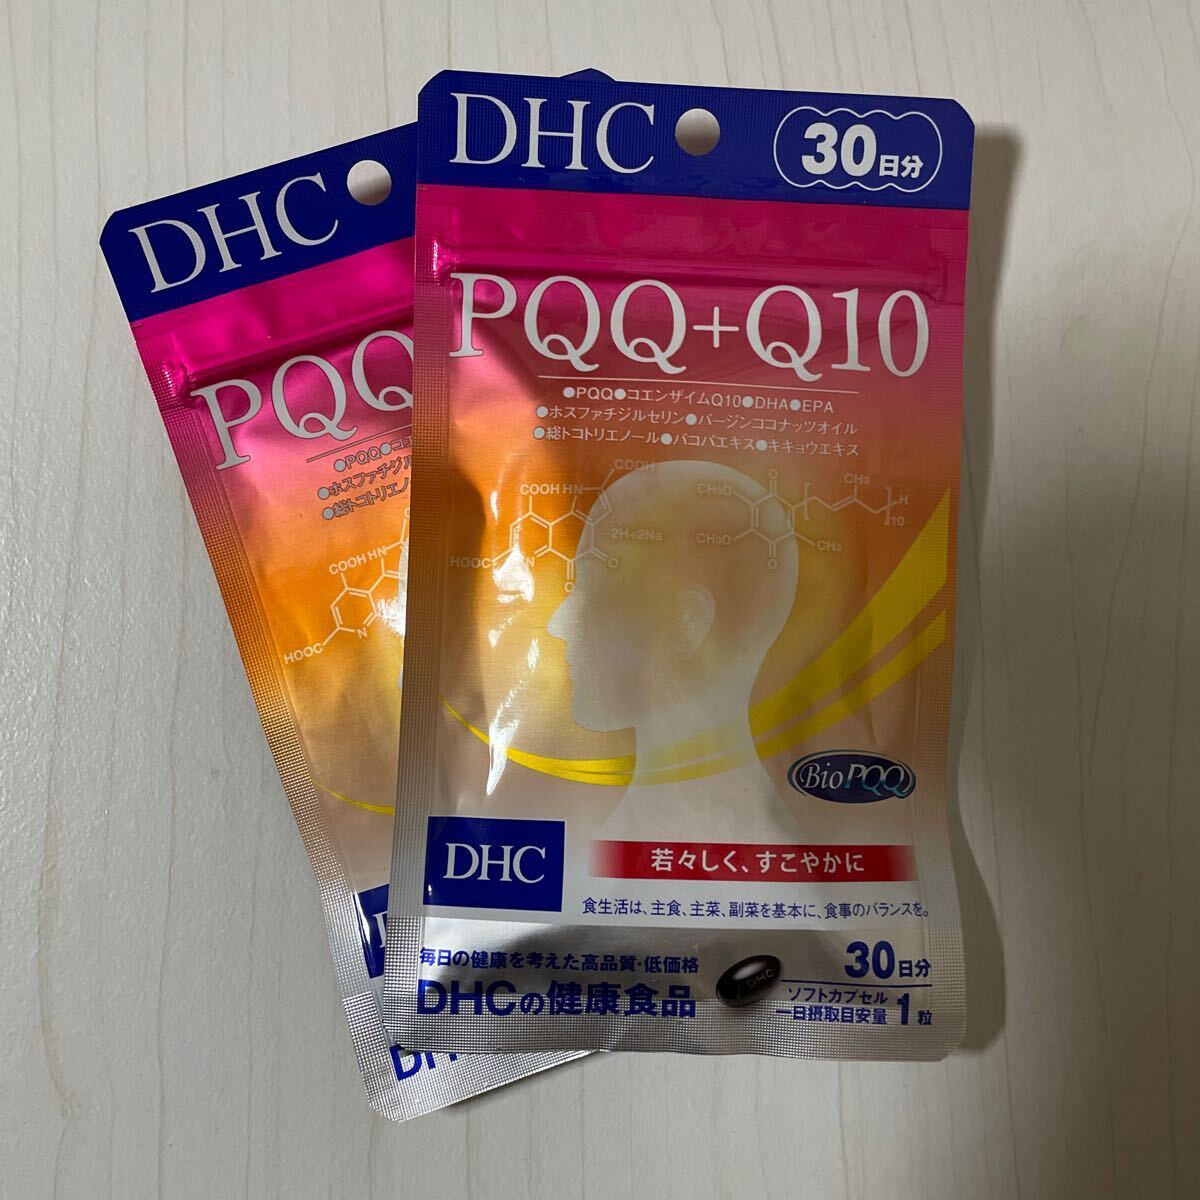 DHC PQQ+Q10 30 day minute 2 sack unused unopened supplement supplement dhc pqq q10 2 health food 